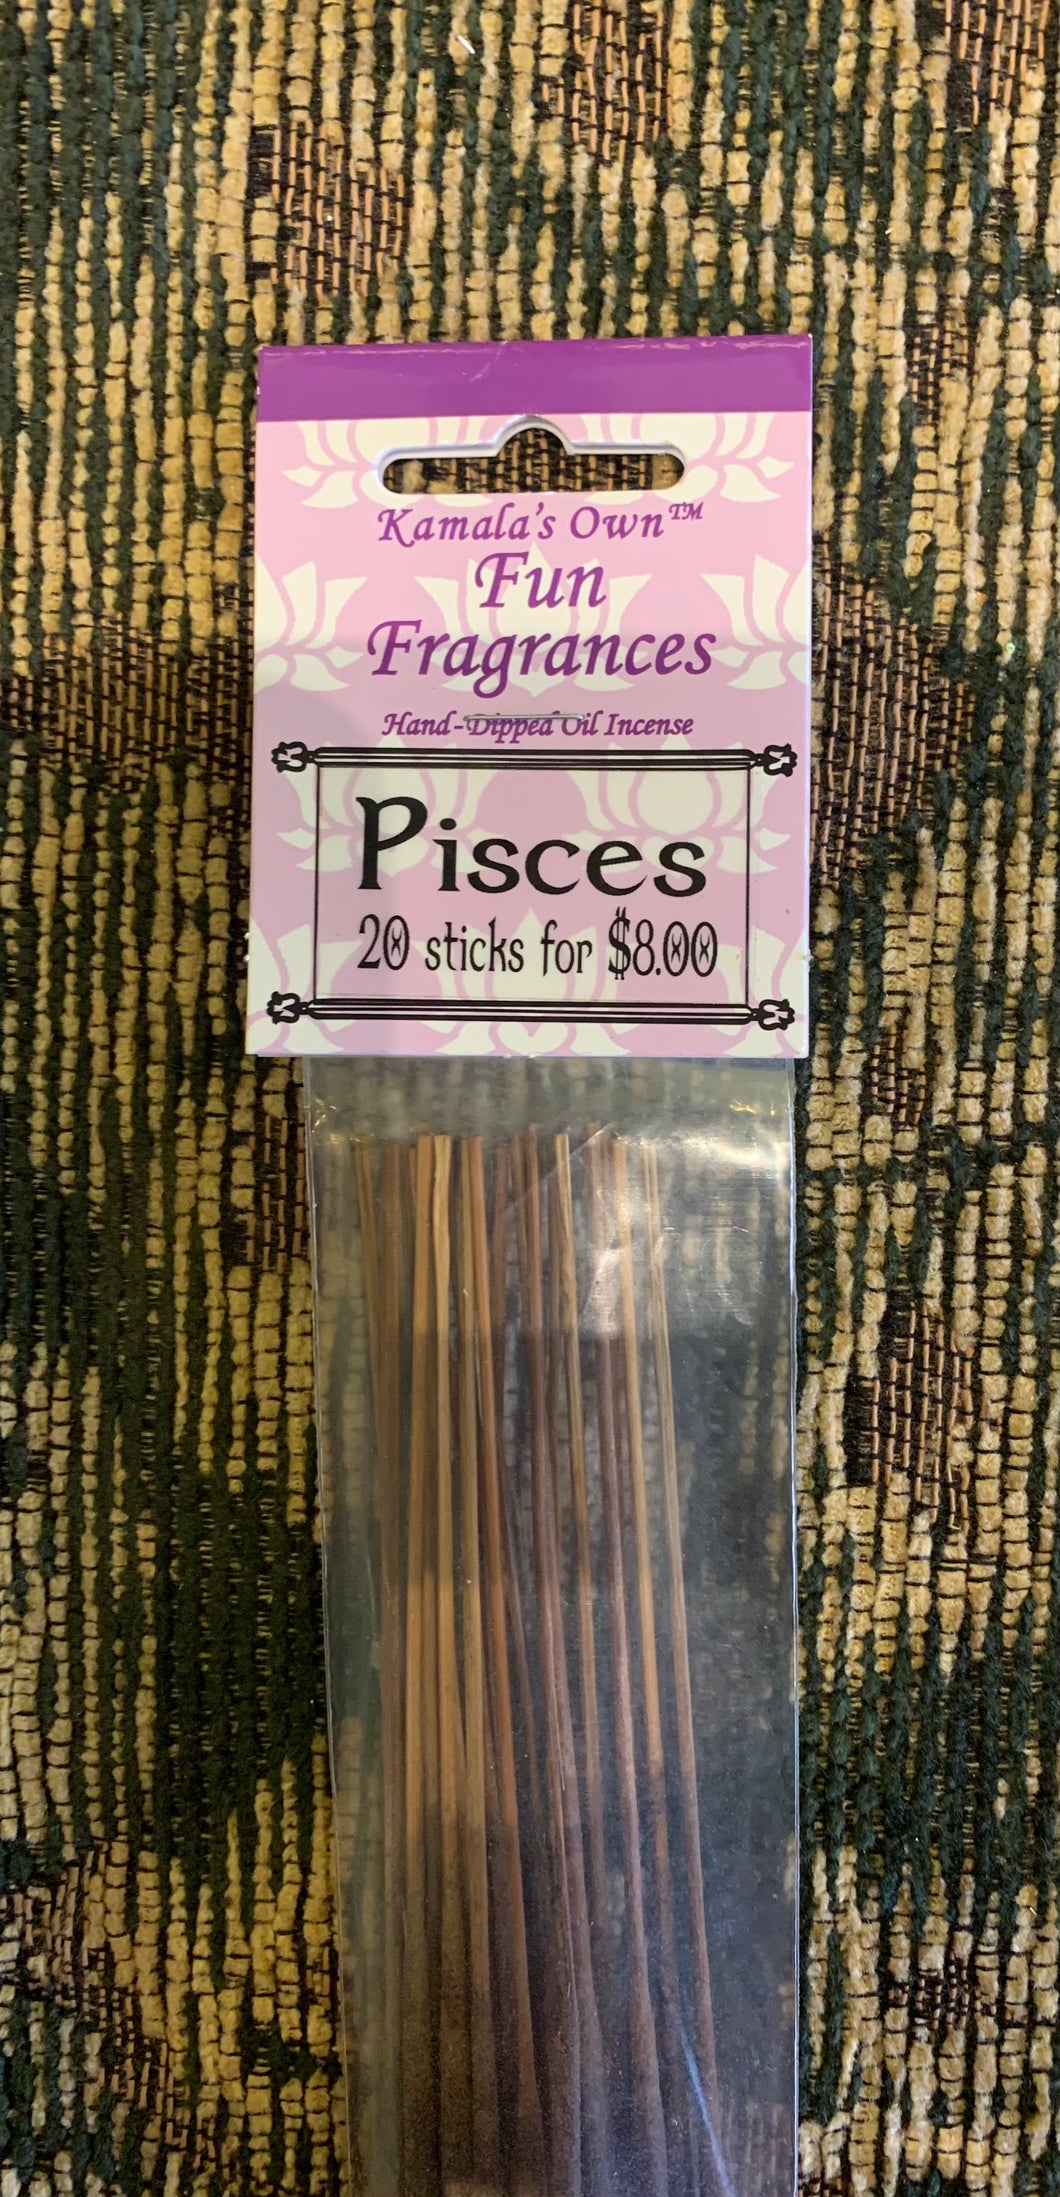 Pisces sticks